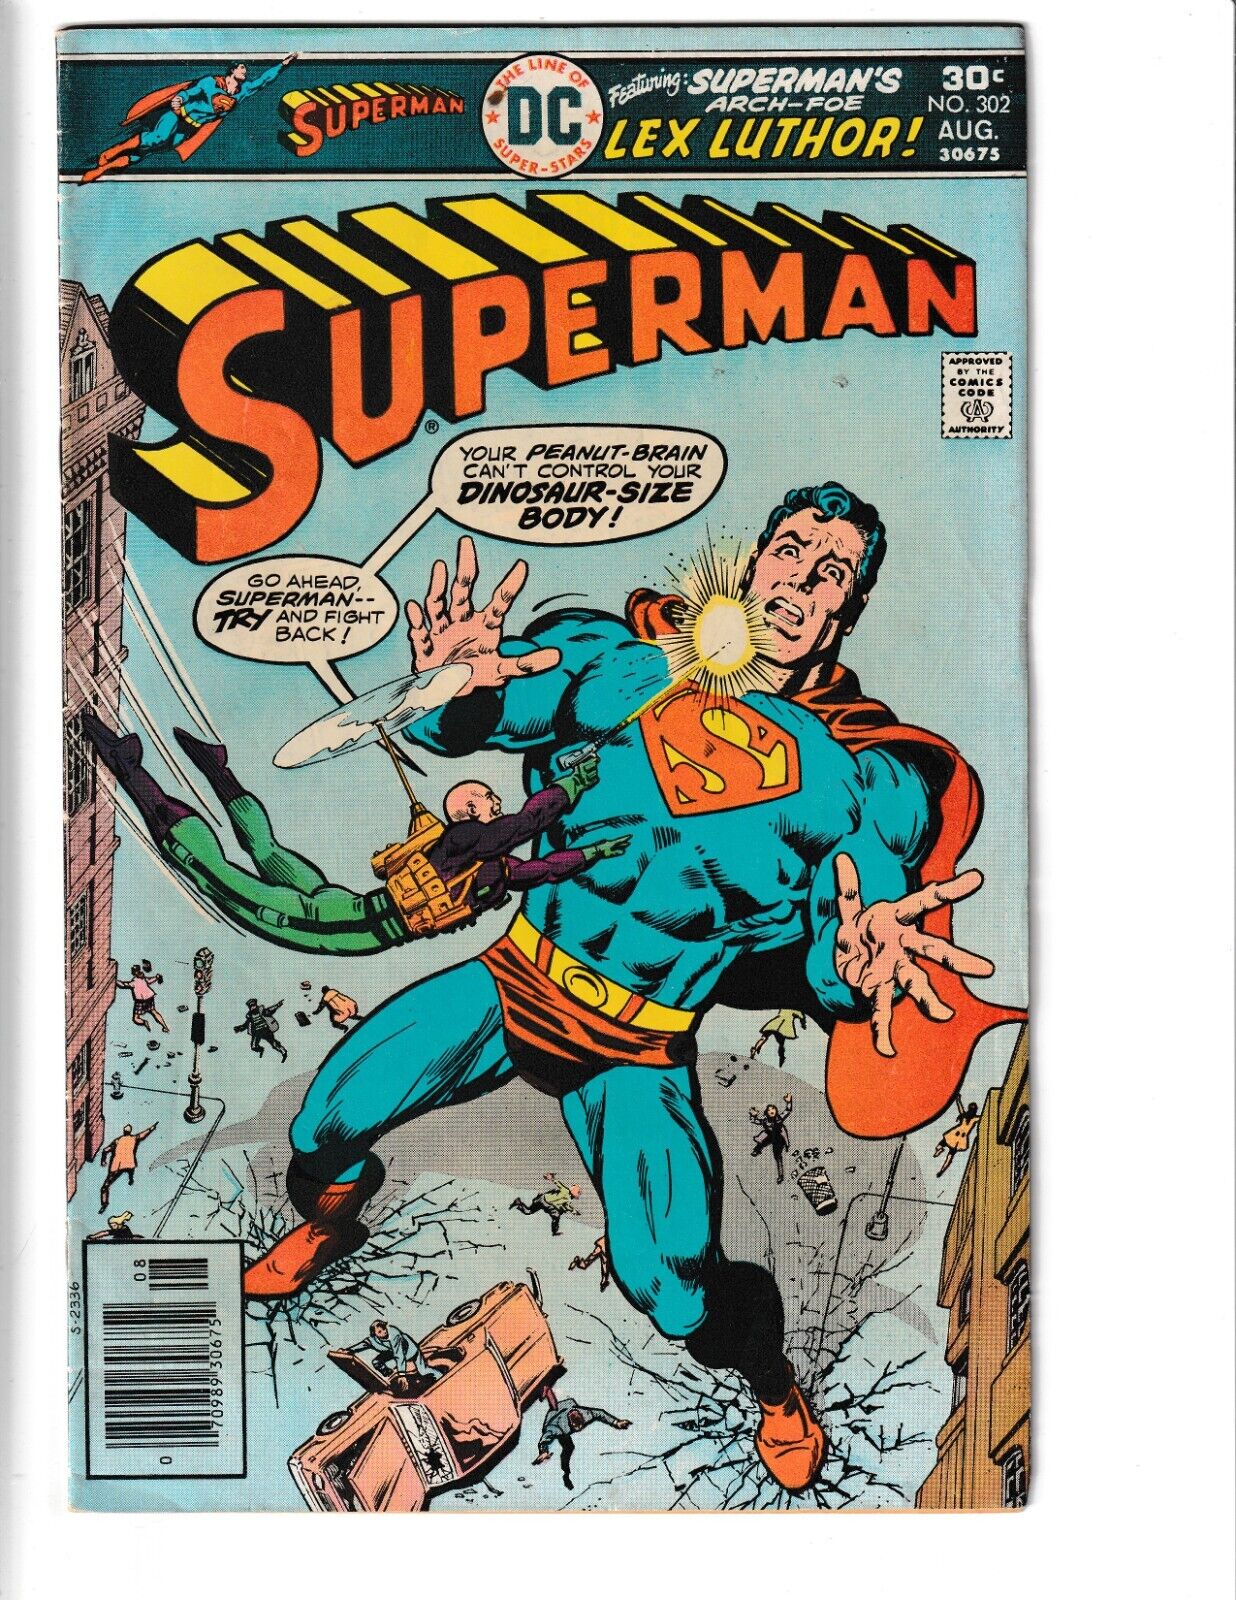 Superman (DC Comics, 1939) 201-423 Pick Your Book Comp Your Run